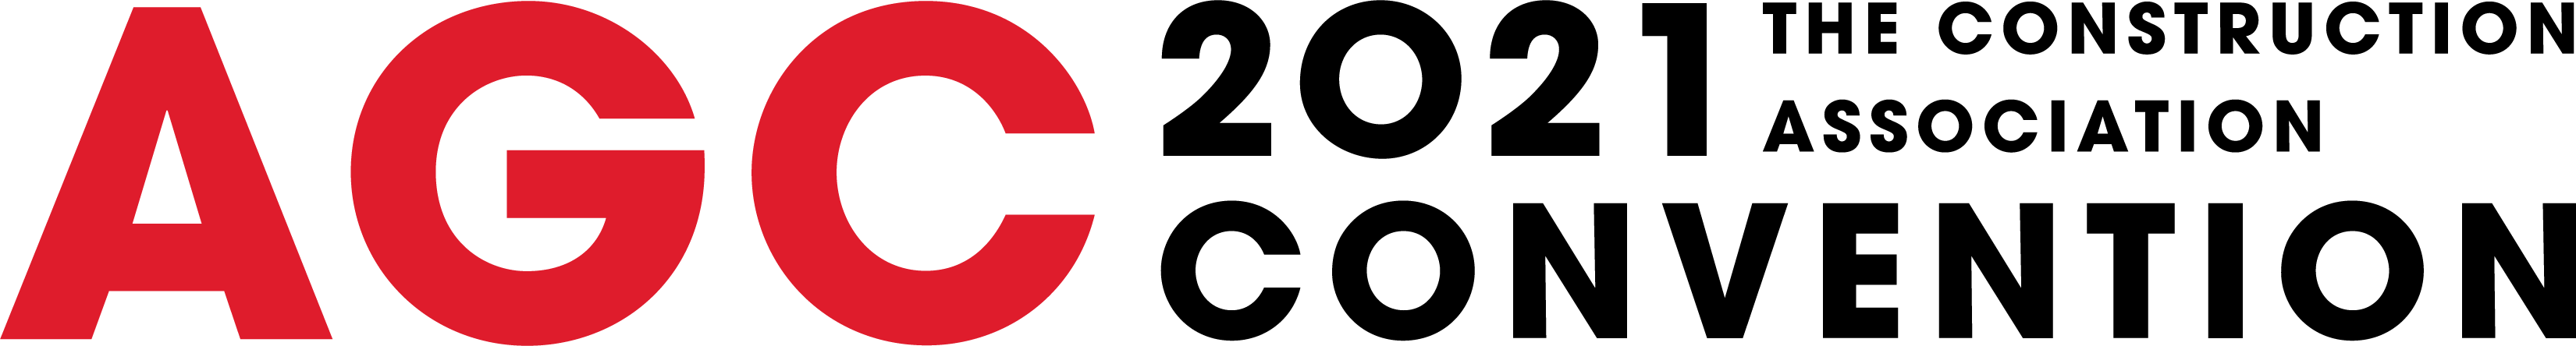 AGC 2021 Convention